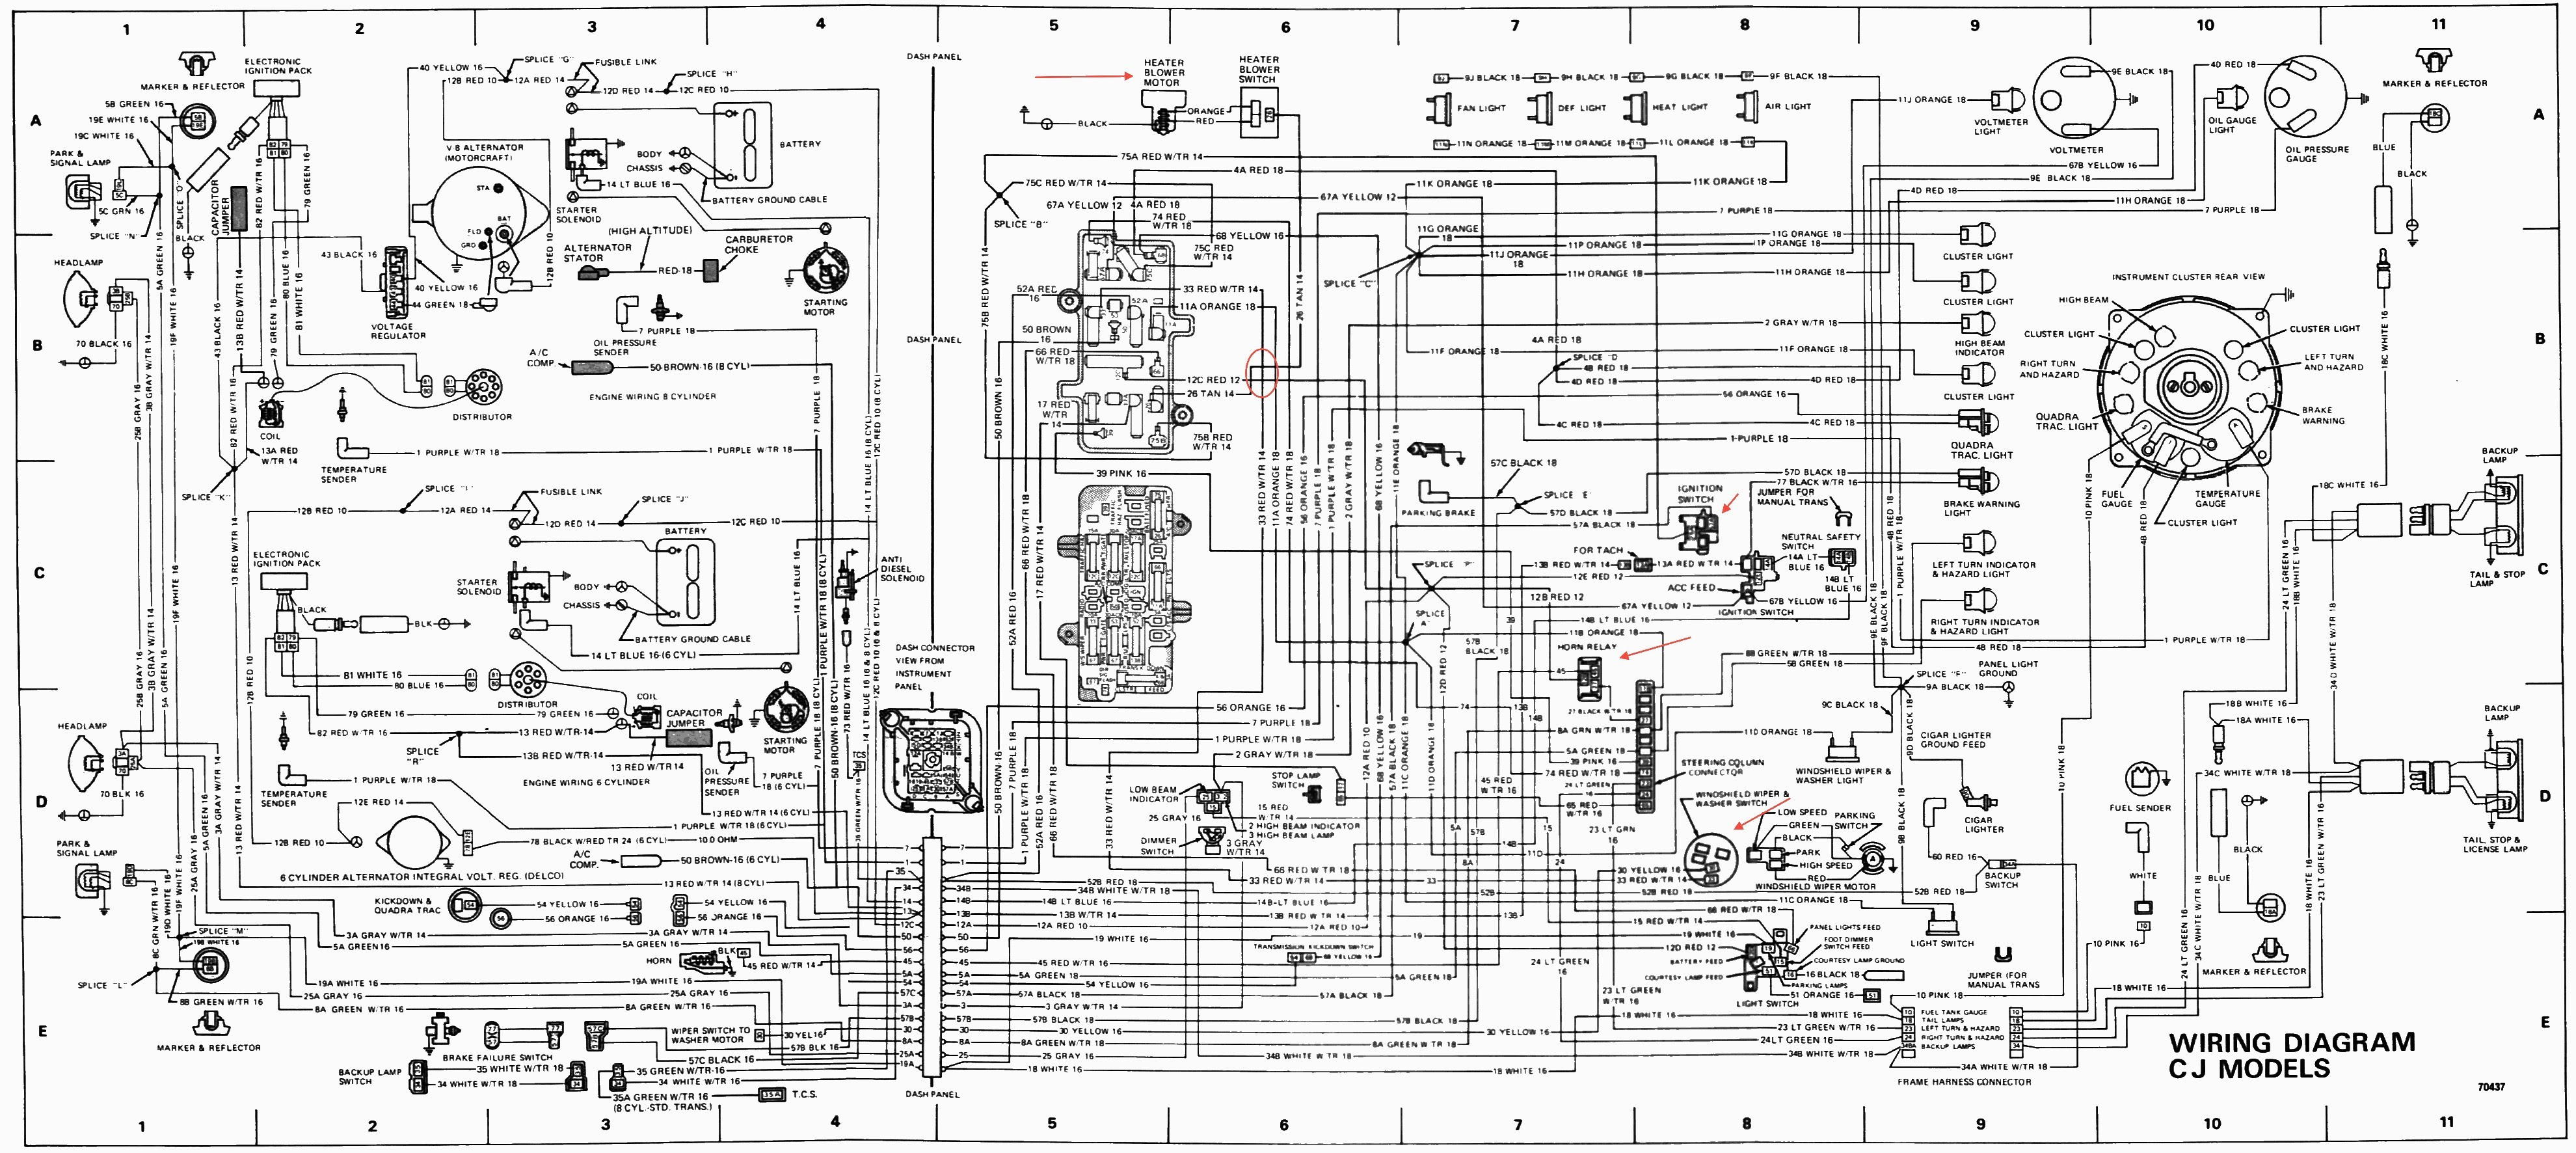 Diagram Ford Pcm Wiring Diagram 1996 Full Version Hd Quality Diagram 1996 Eardiagrams Eracleaturismo It